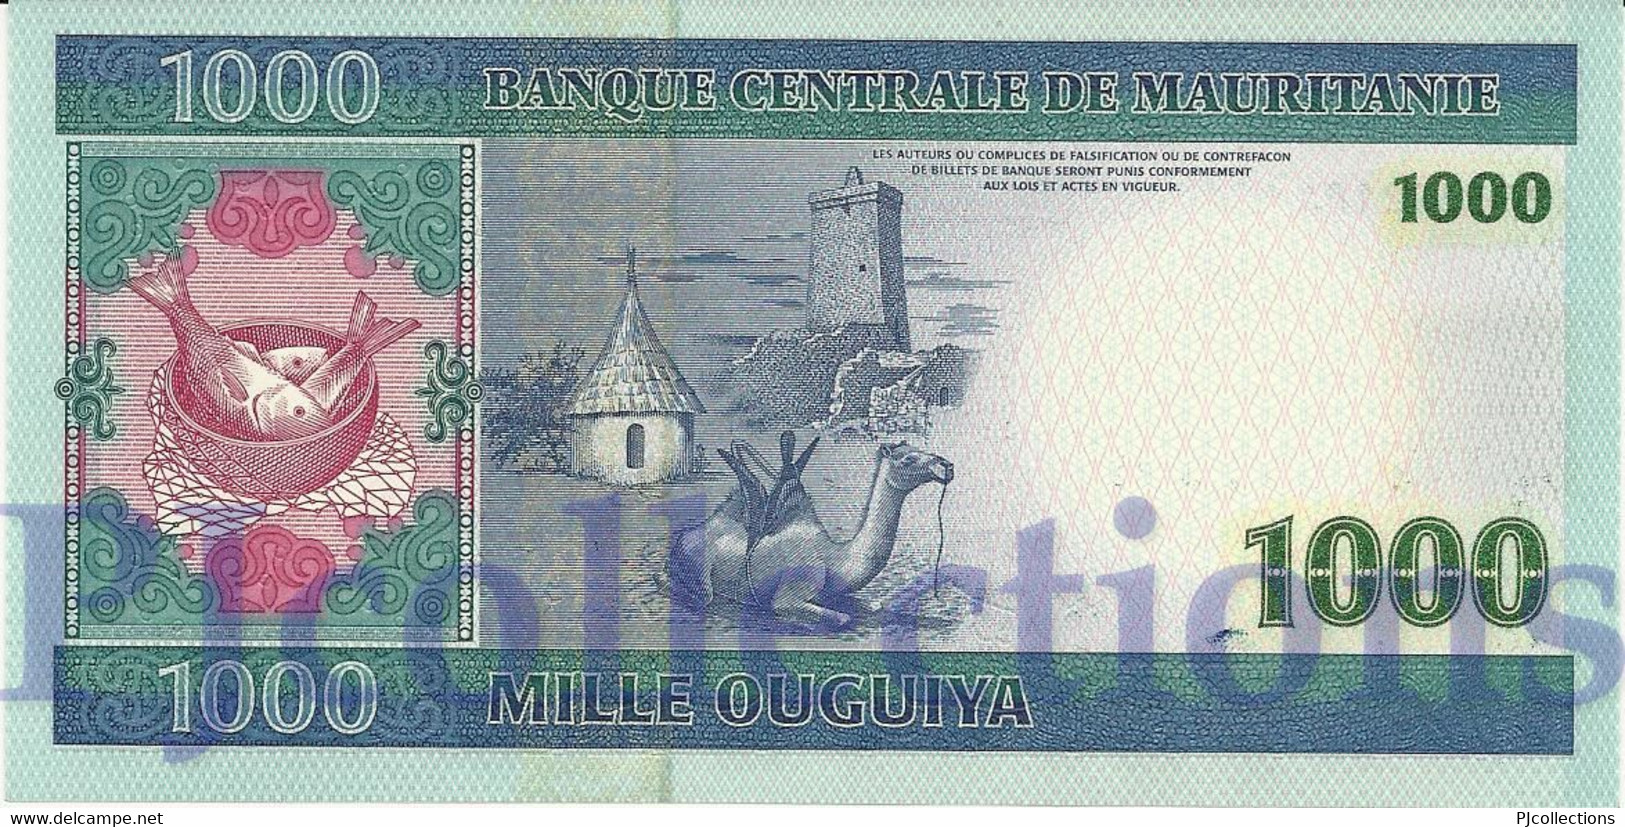 MAURITANIA 1000 OUGUIYA 2004 PICK 13a UNC - Mauritania